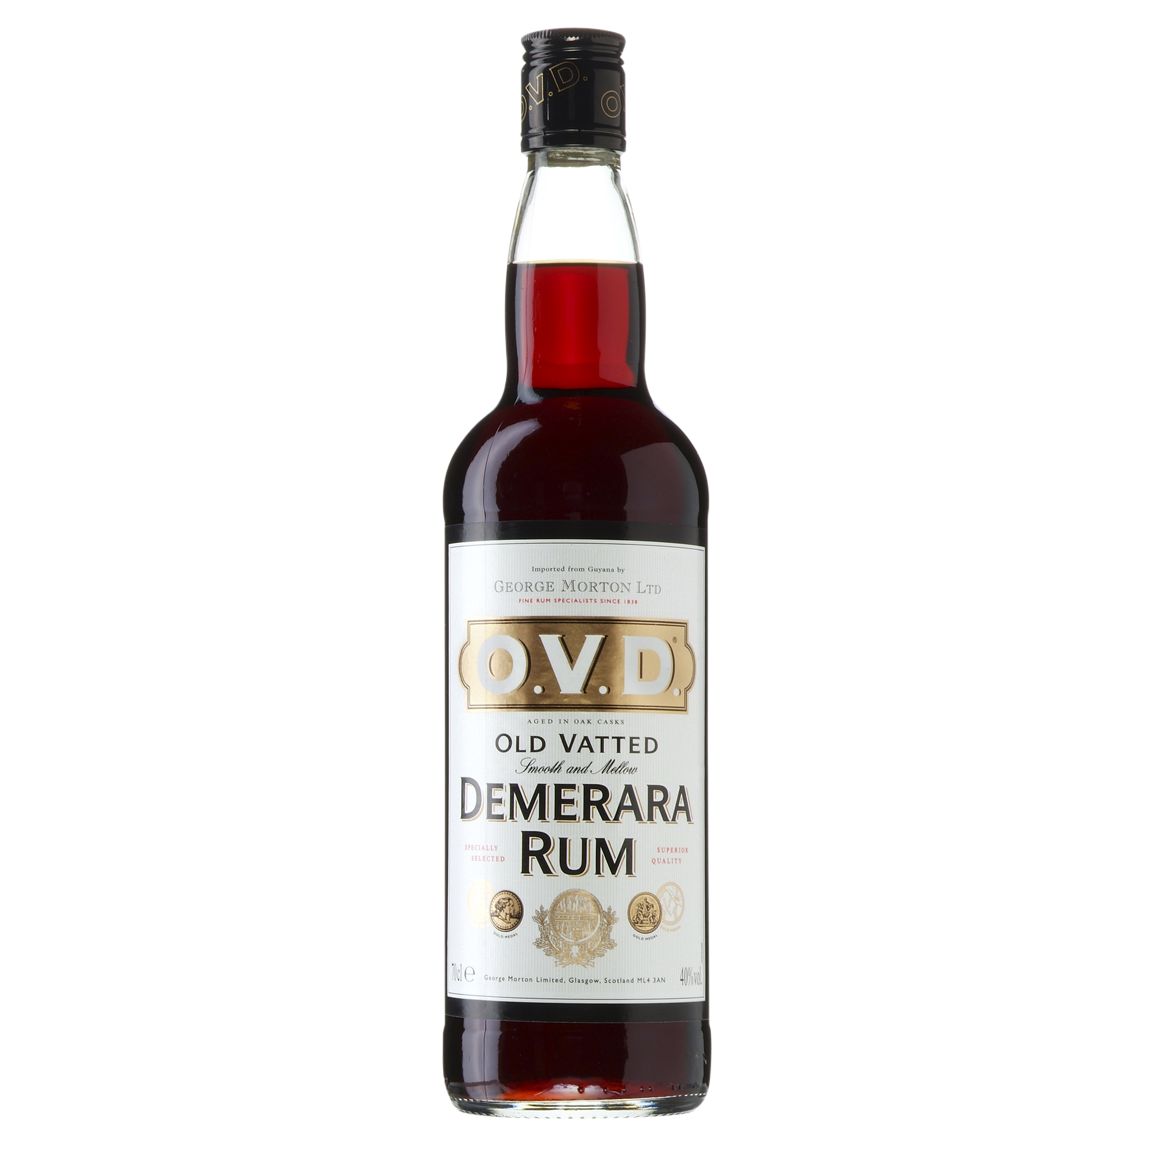 OVD (Old Vatted Demerara) Rum, Guyana at John Lewis